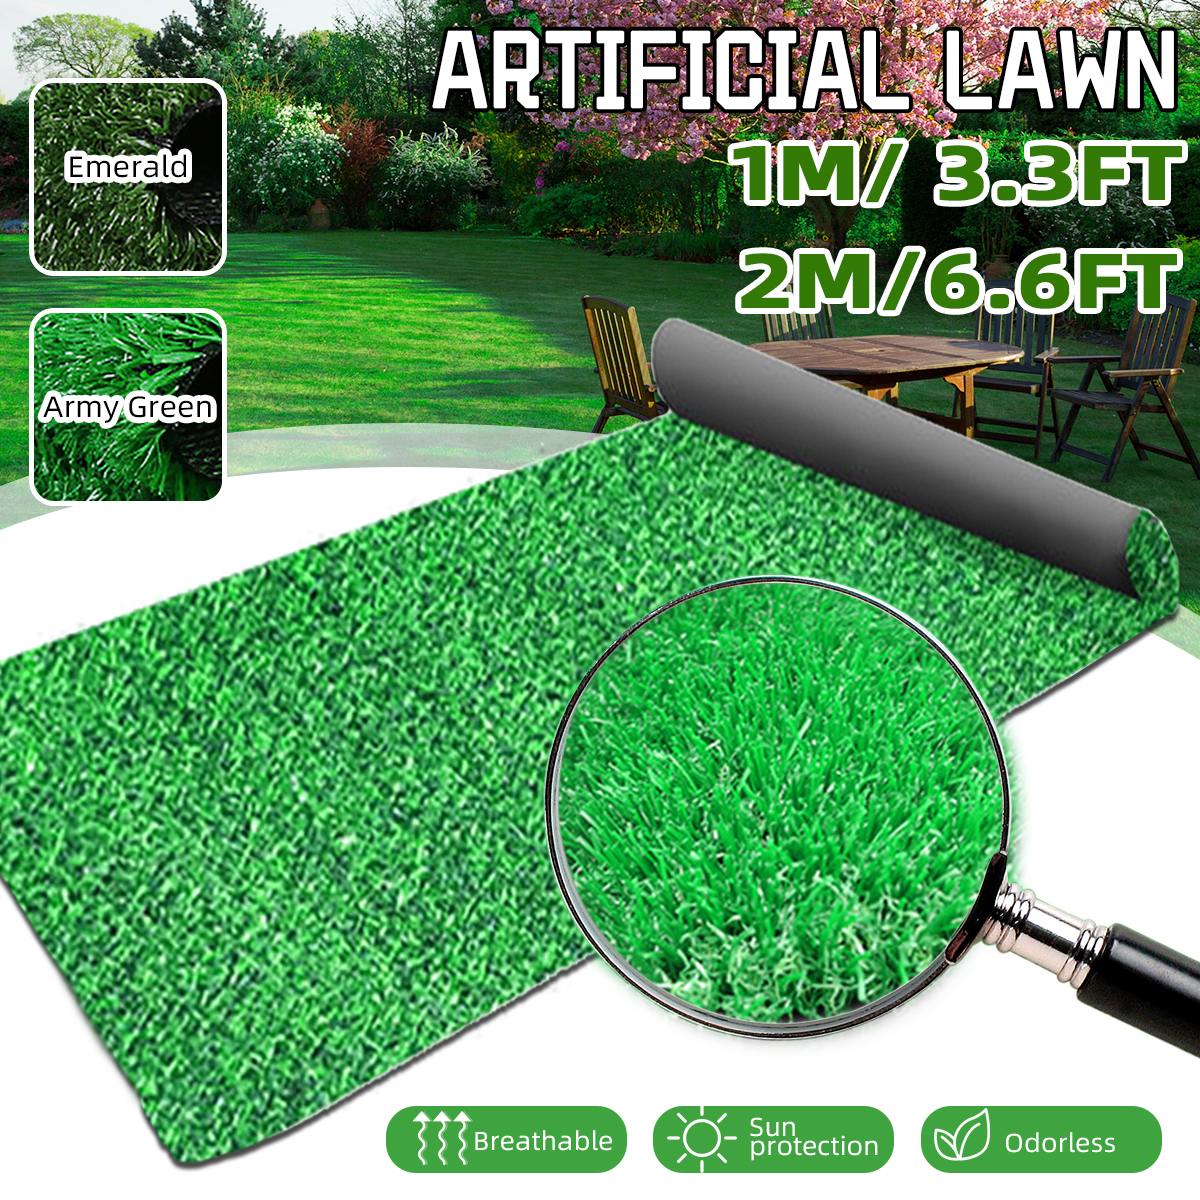 Artificial-Lawn-Turf-Grass-Artificial-Lawn-Carpet-Simulation-Outdoor-Green-Lawn-for-Garden-Patio-Lan-1789361-1